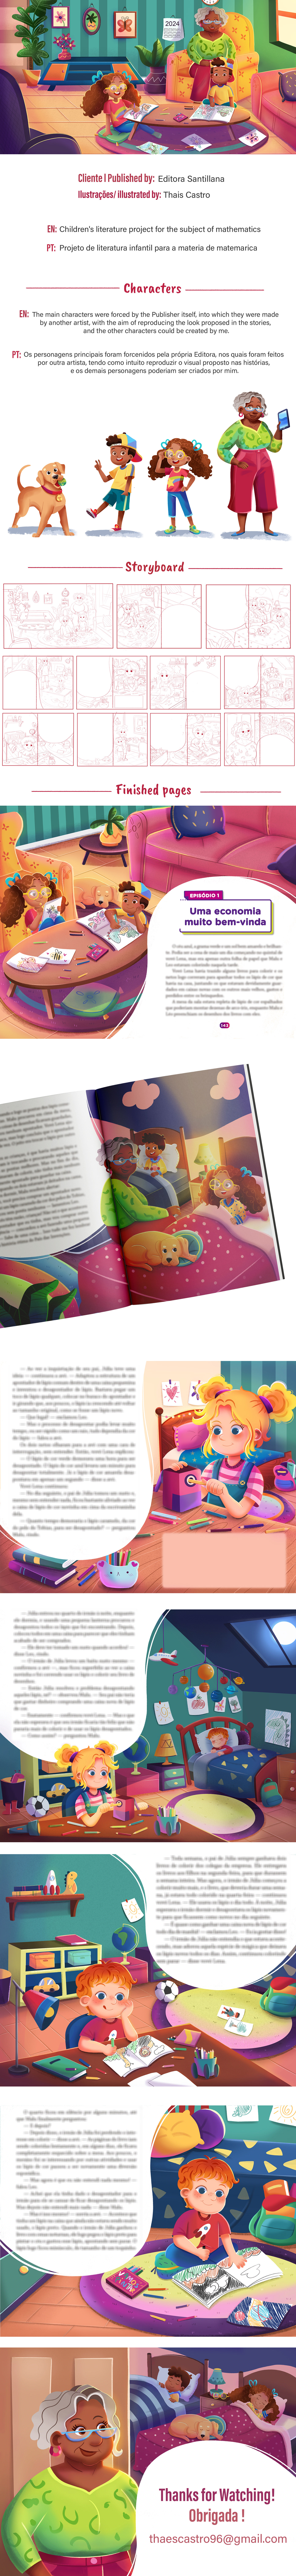 children's book ILLUSTRATION  Character design  digital illustration Graphic Designer typography   kidlitart book children illustration Picture book